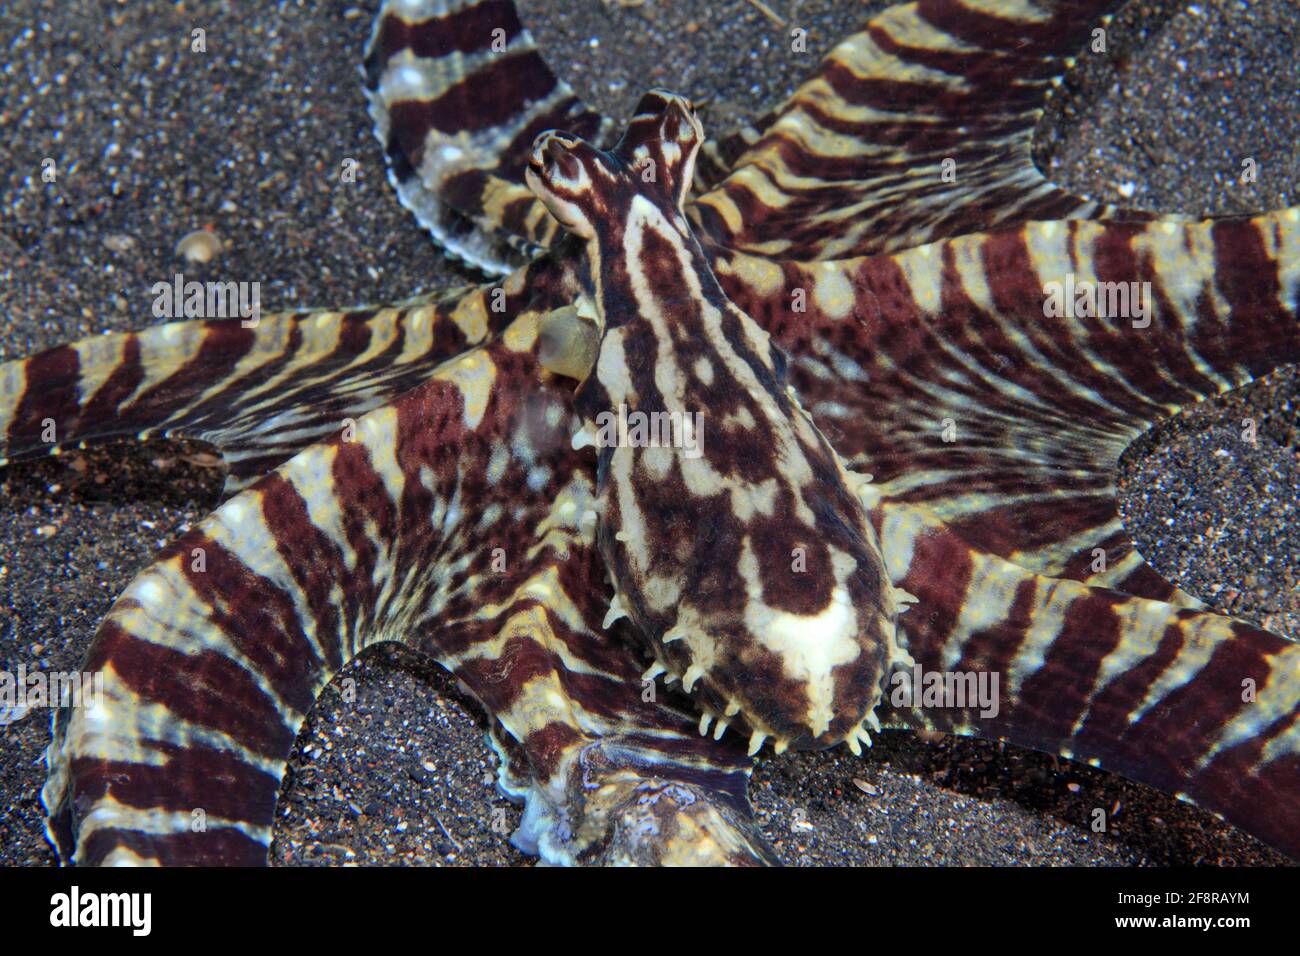 Mimikrykrake (Thaumoptopus mimicus) Am Sandgrund (Lembeh, Sulawesi, indonésien) - mimic Octopus (Lembeh, Sulawesi, Indonésie) Banque D'Images